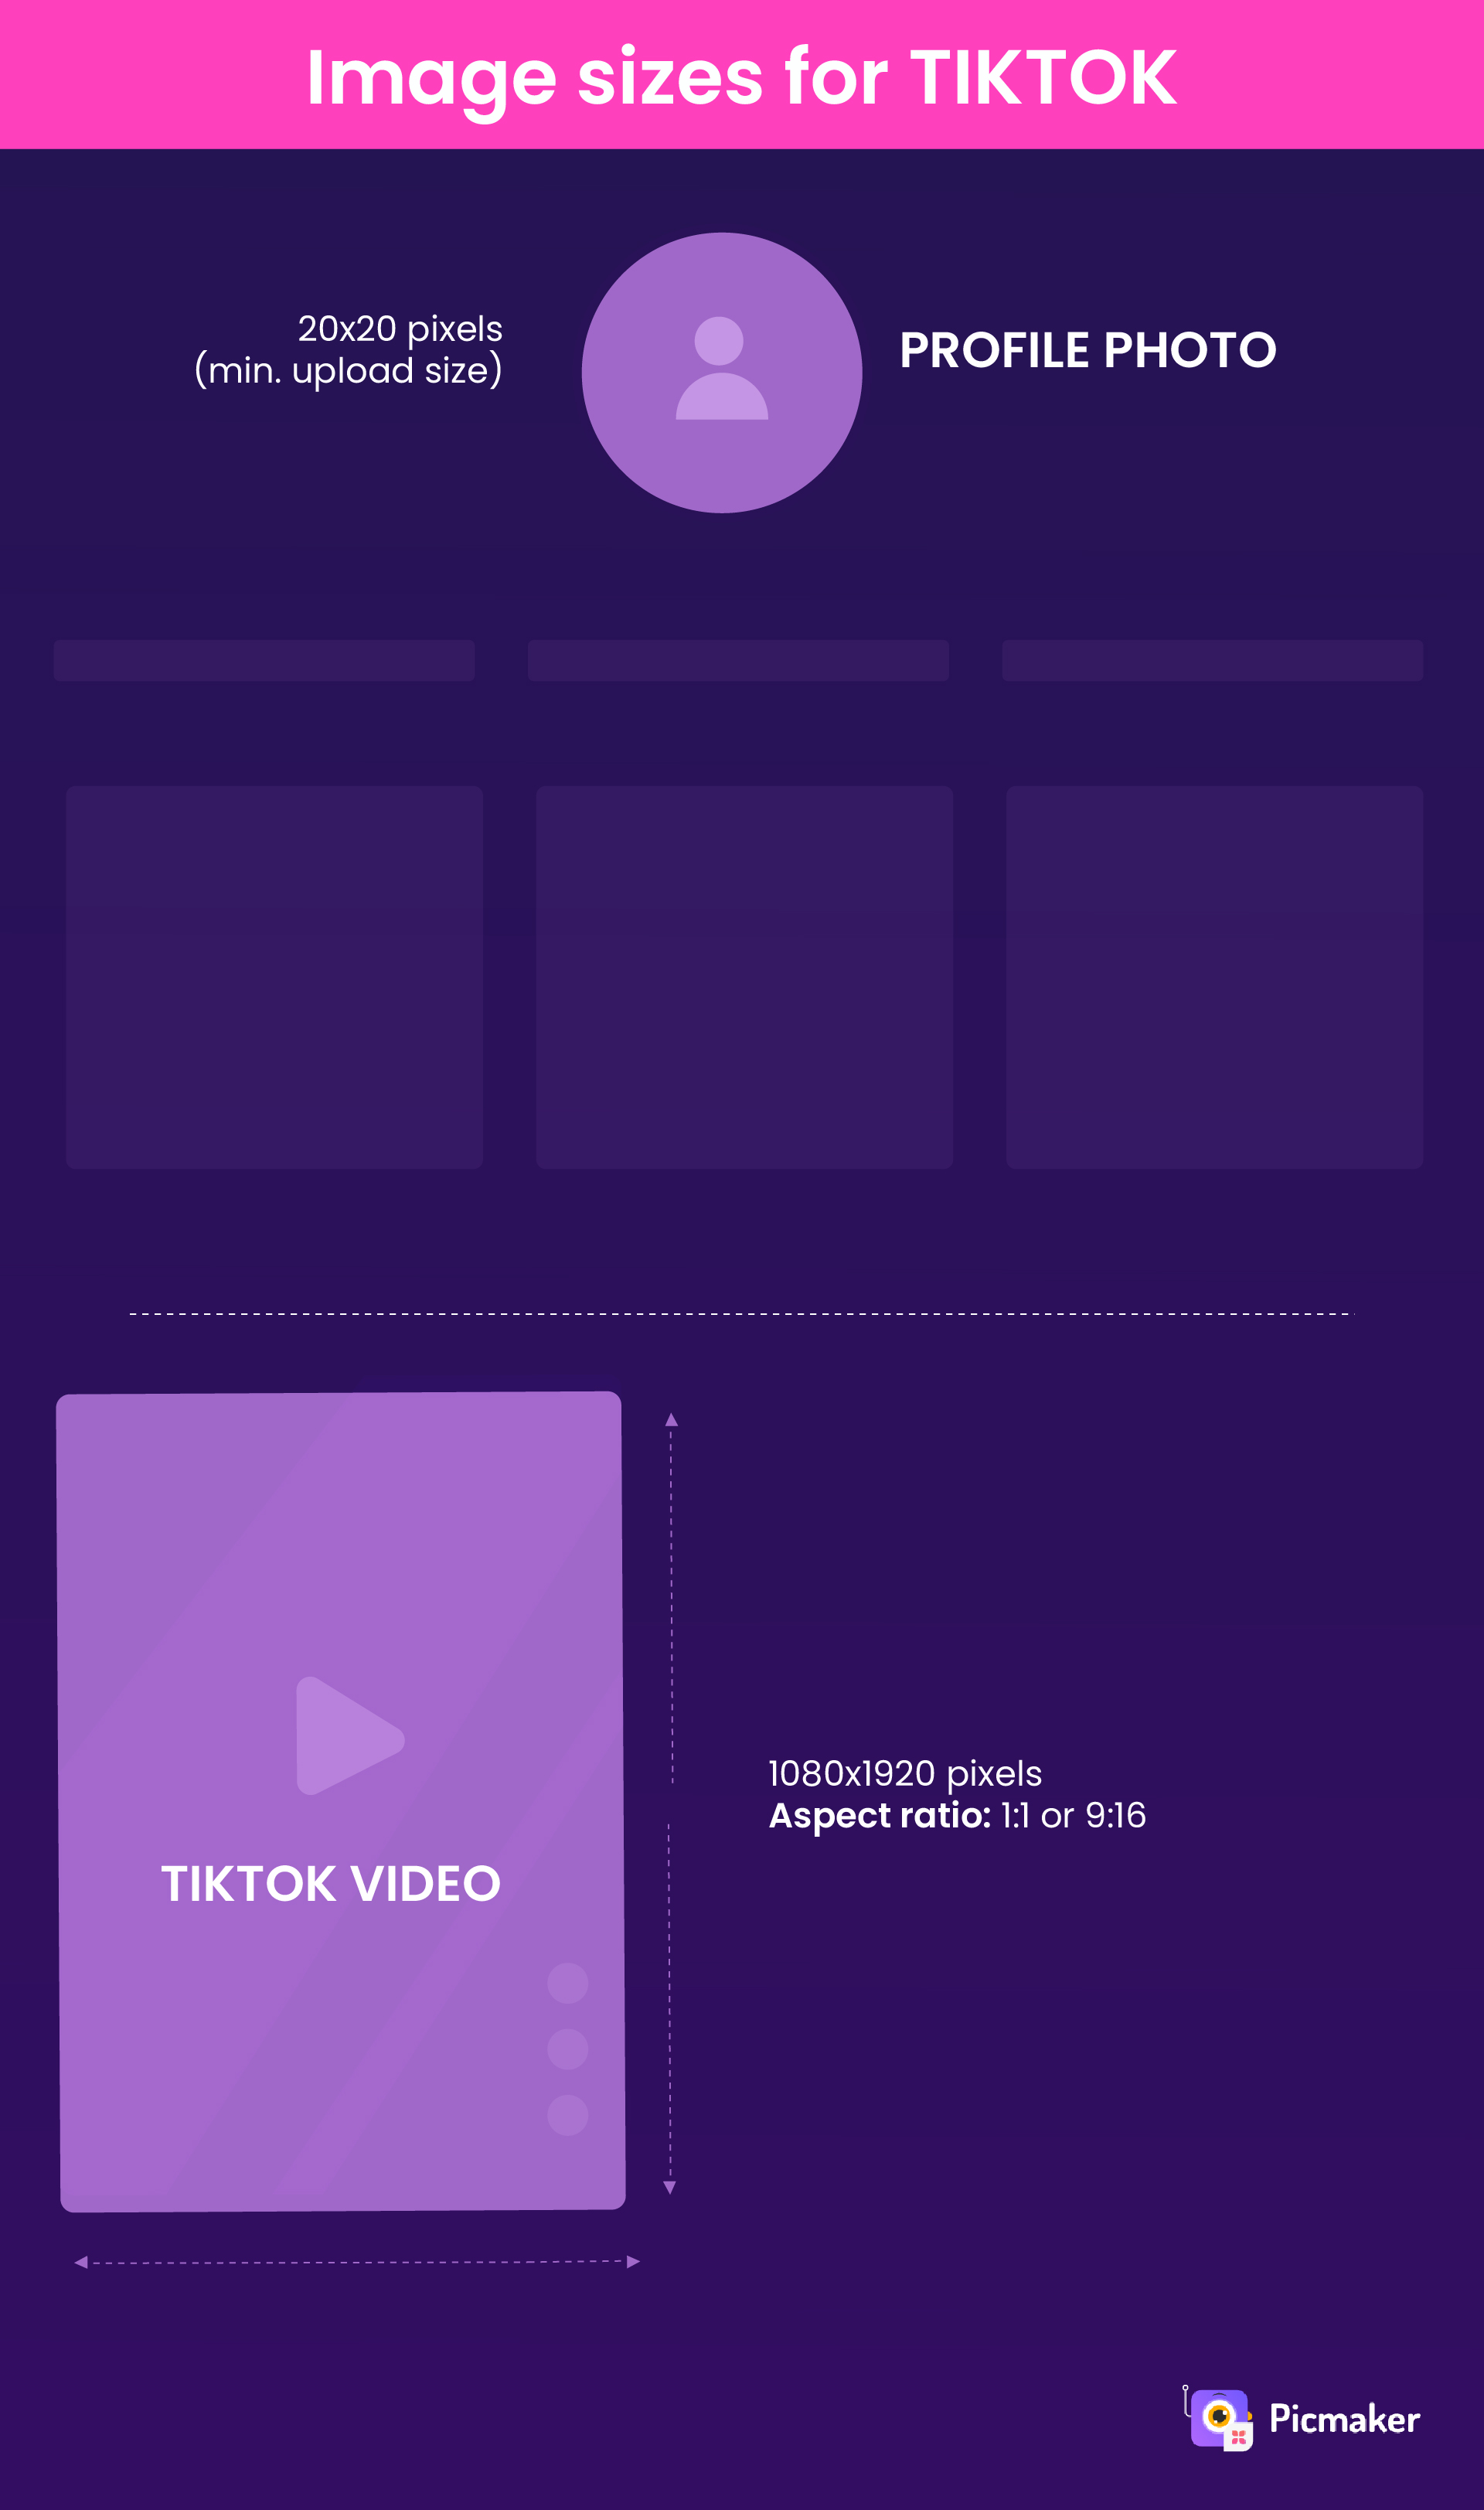 TikTok image sizes infographic